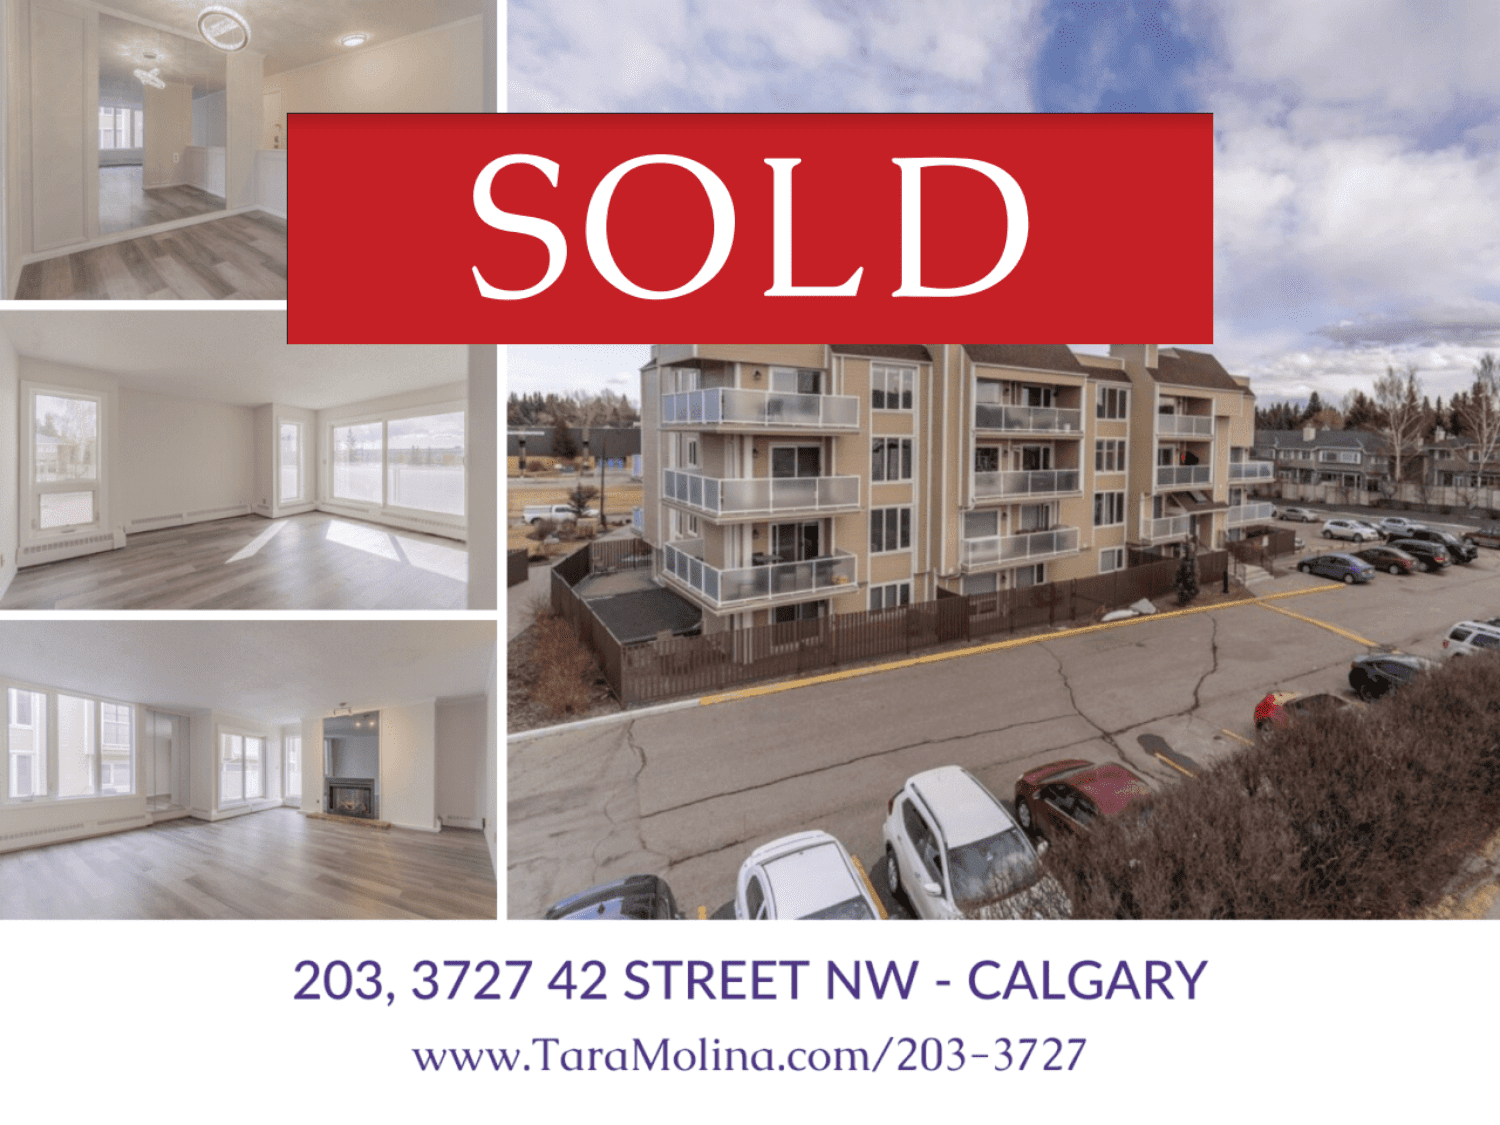 Sold in Calgary by Tara Molina Real Estate Group